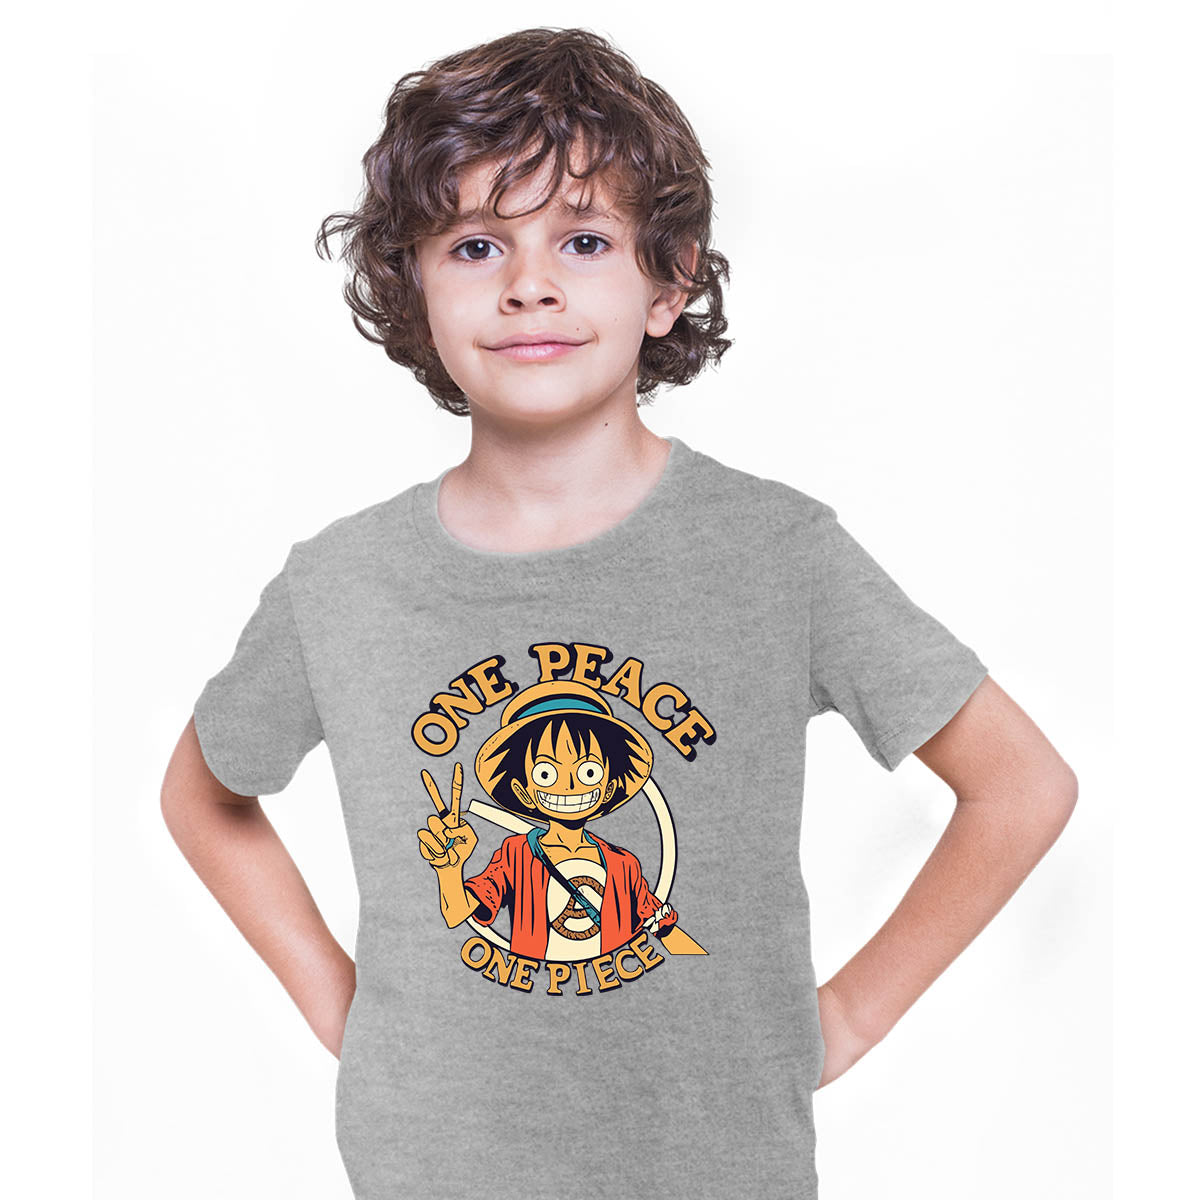 One Peace Monkey D. Luffy One Piece Anime Manga Grey T-shirt for Kids